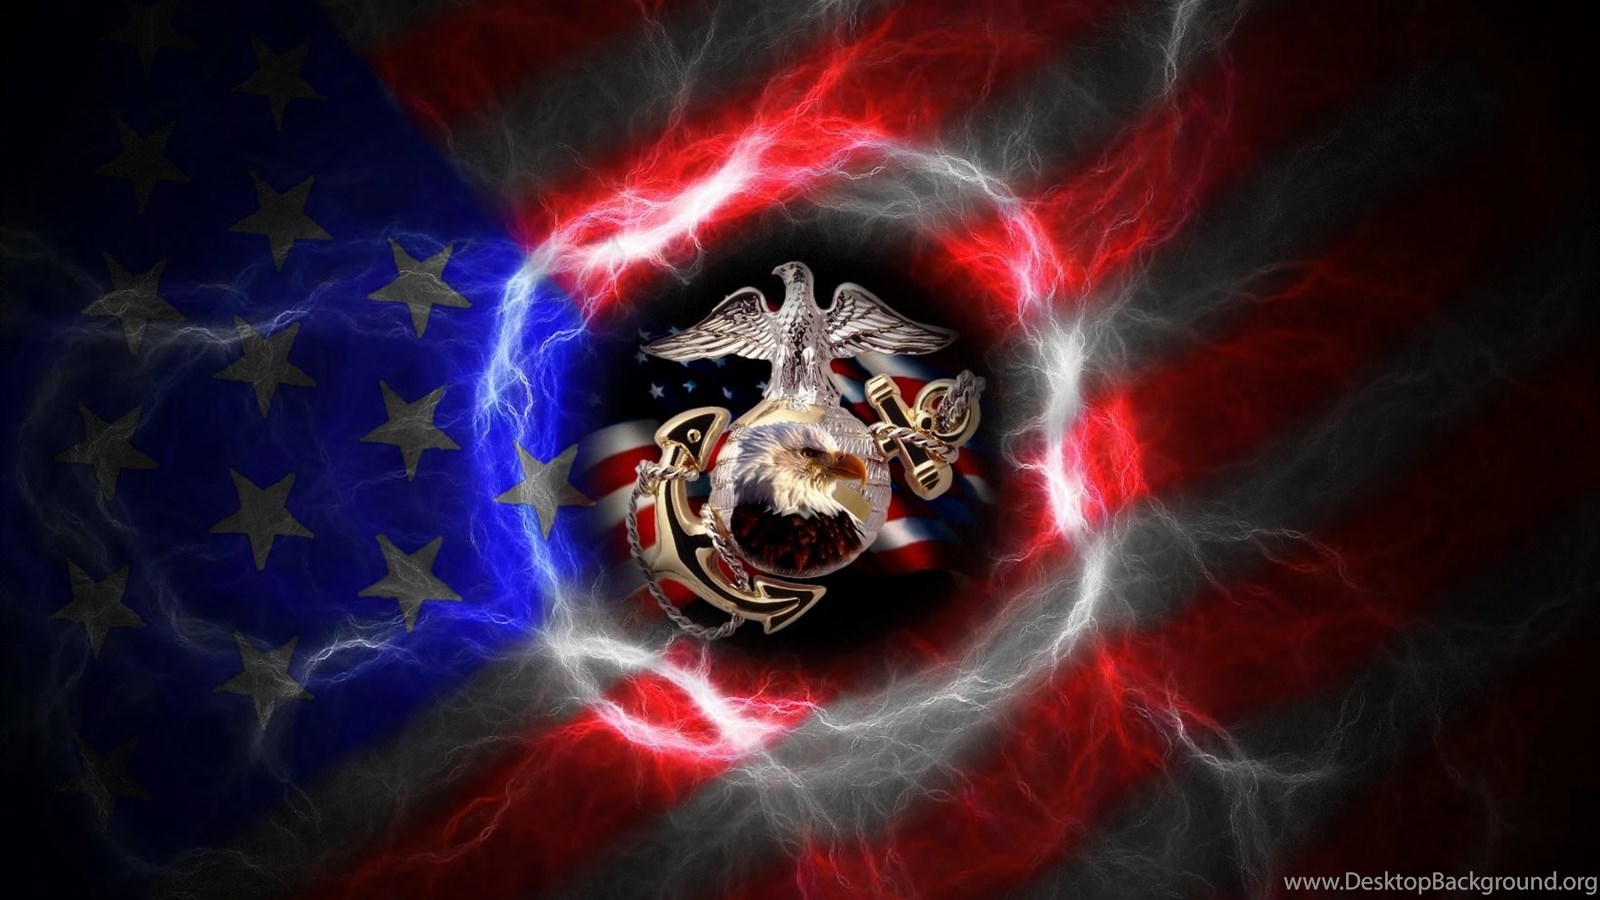 Awesome Marine Corps Logo Wallpaper Desktop Background